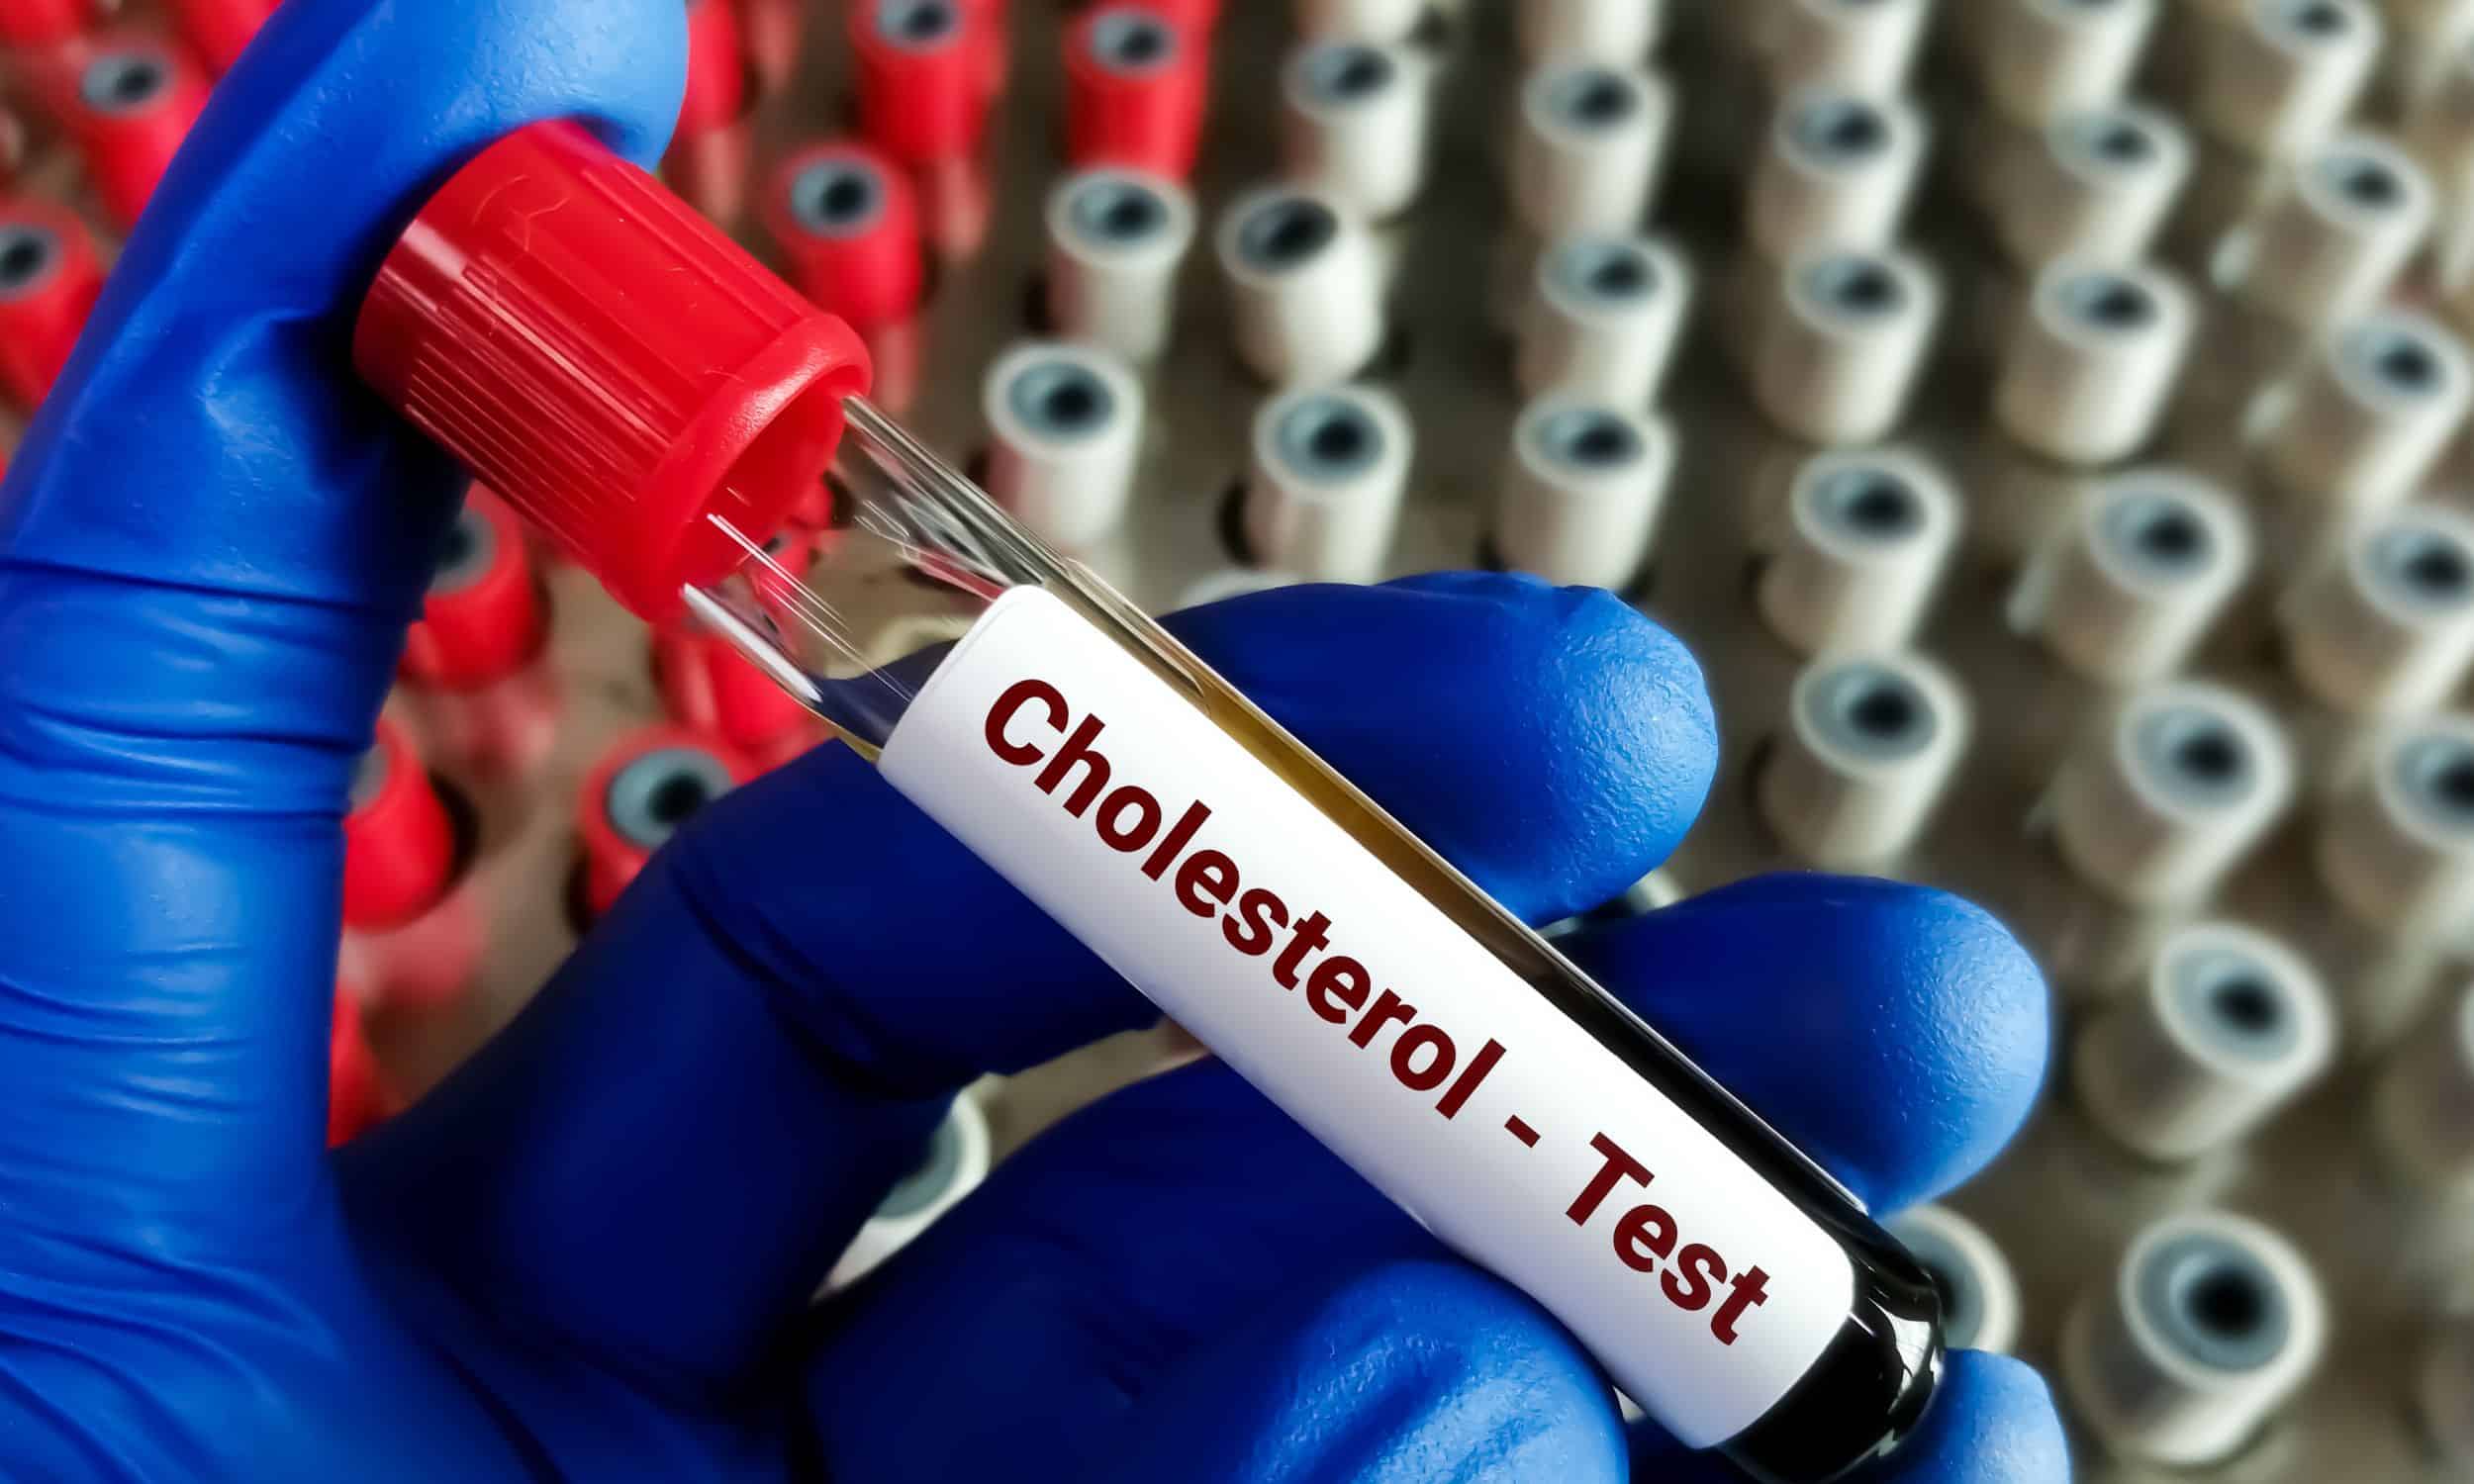 cholesterol test tube full of blood